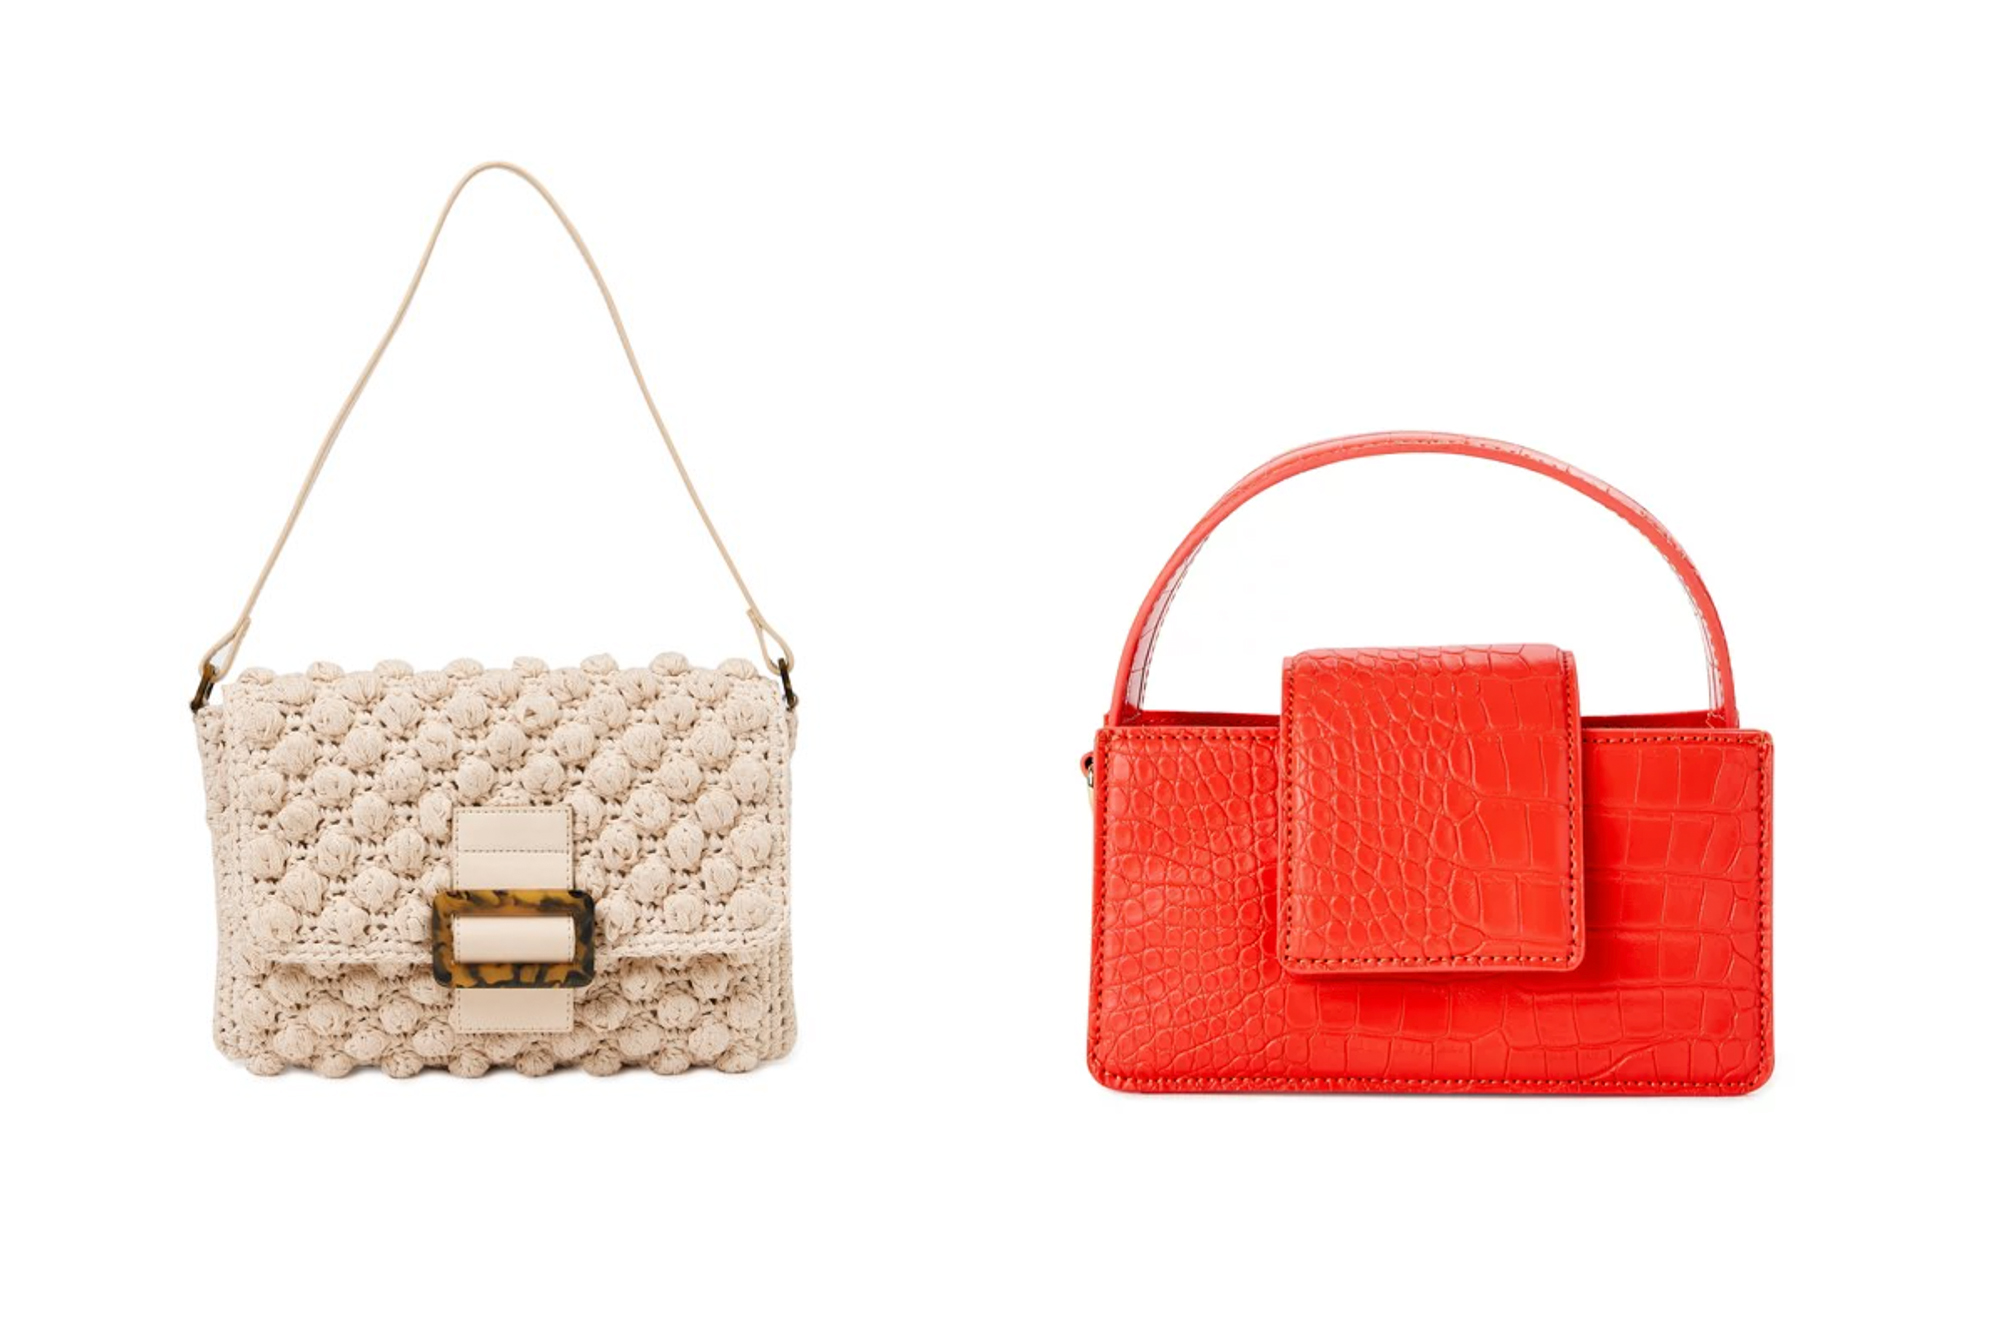 Need Help Choosing - A.P.C. Small Grace Bag : r/handbags